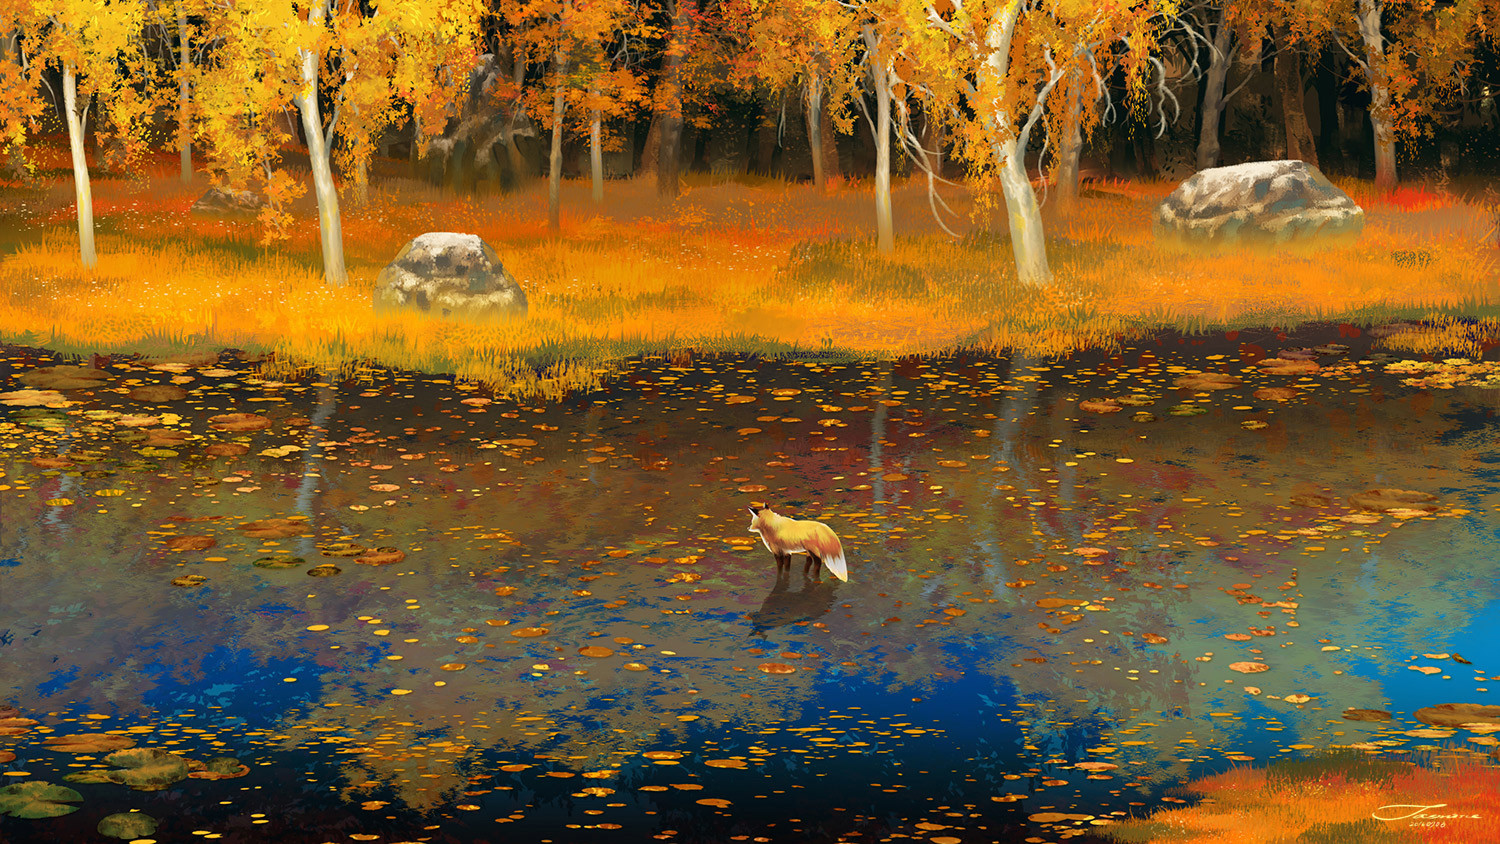 Watermother Jian Digital Art Fantasy Art Fox River Forest Fall Rocks Lily Pads 1500x844